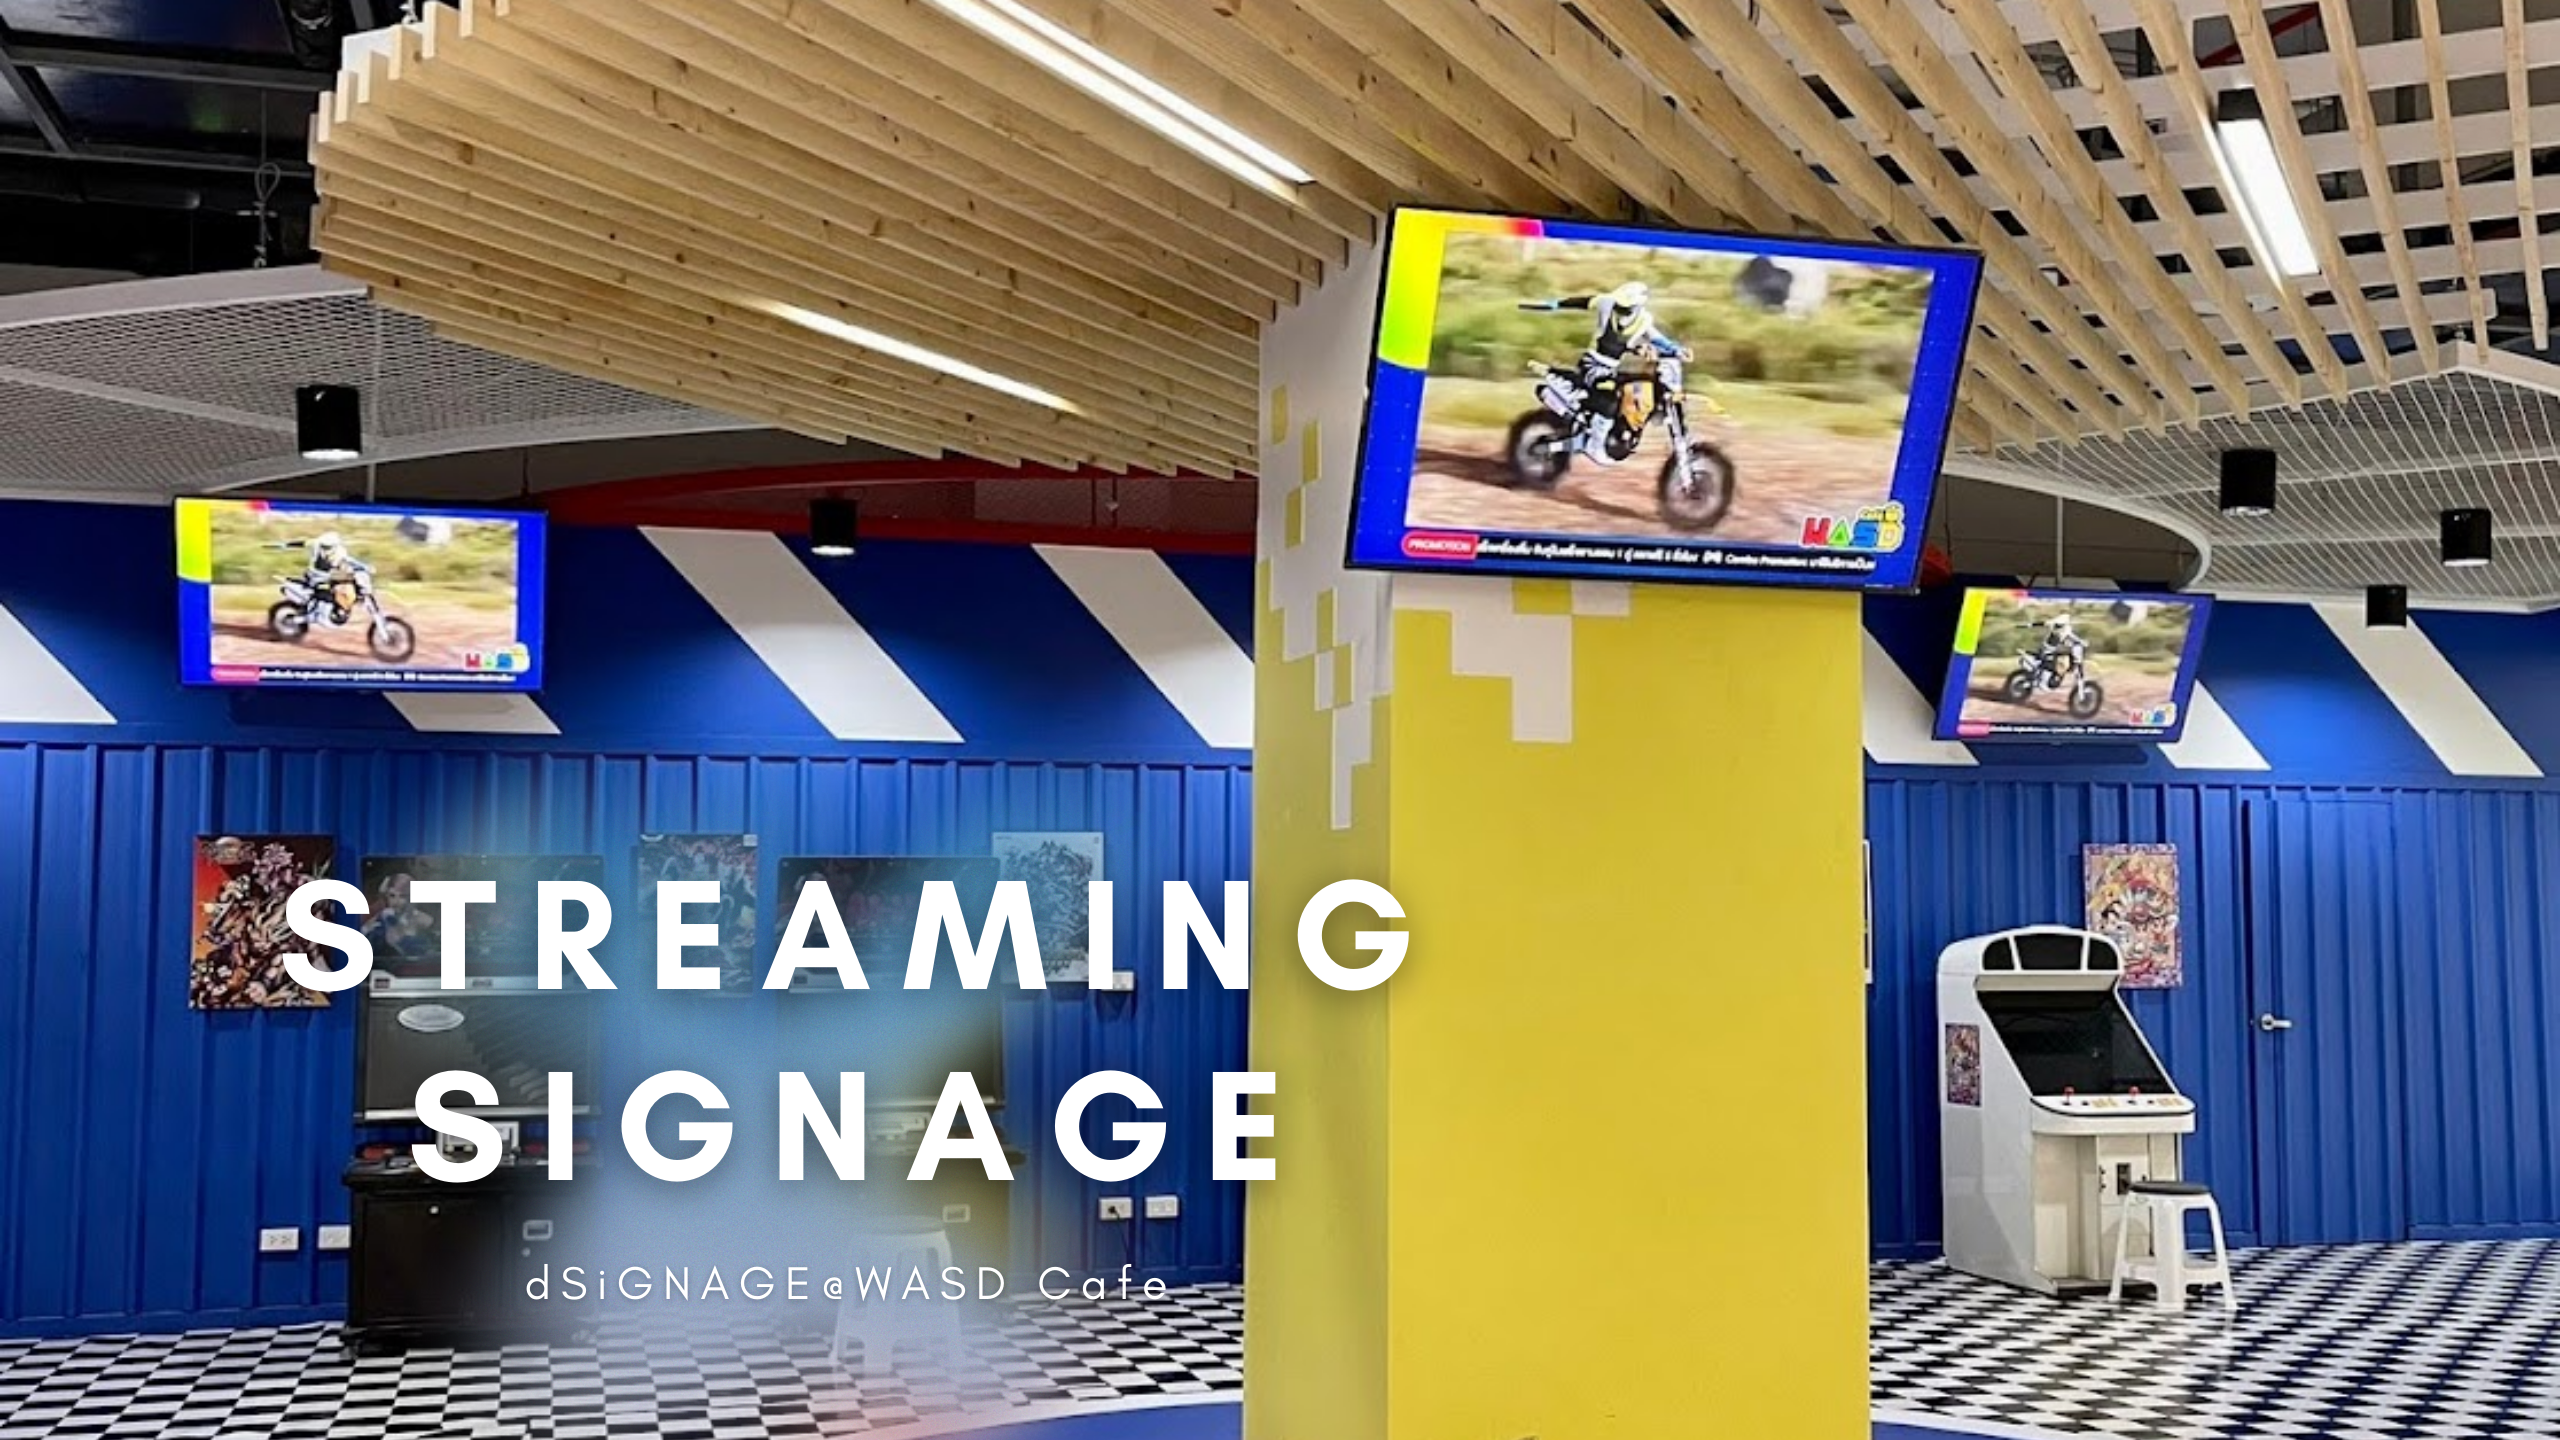 WASD Cafe ร้านเกมส์ที่ใหญ่สุดในซีคอนบางแค เลือกใช้จอ Digital Signage LG สำหรับ Live Streaming